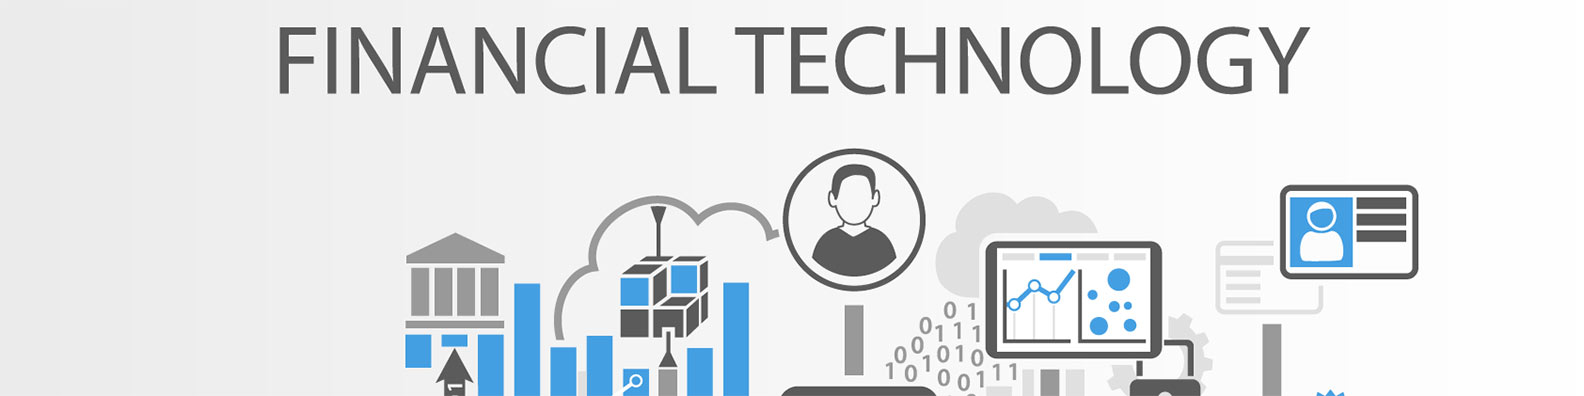 Financial Technology LinkedIn Background Image